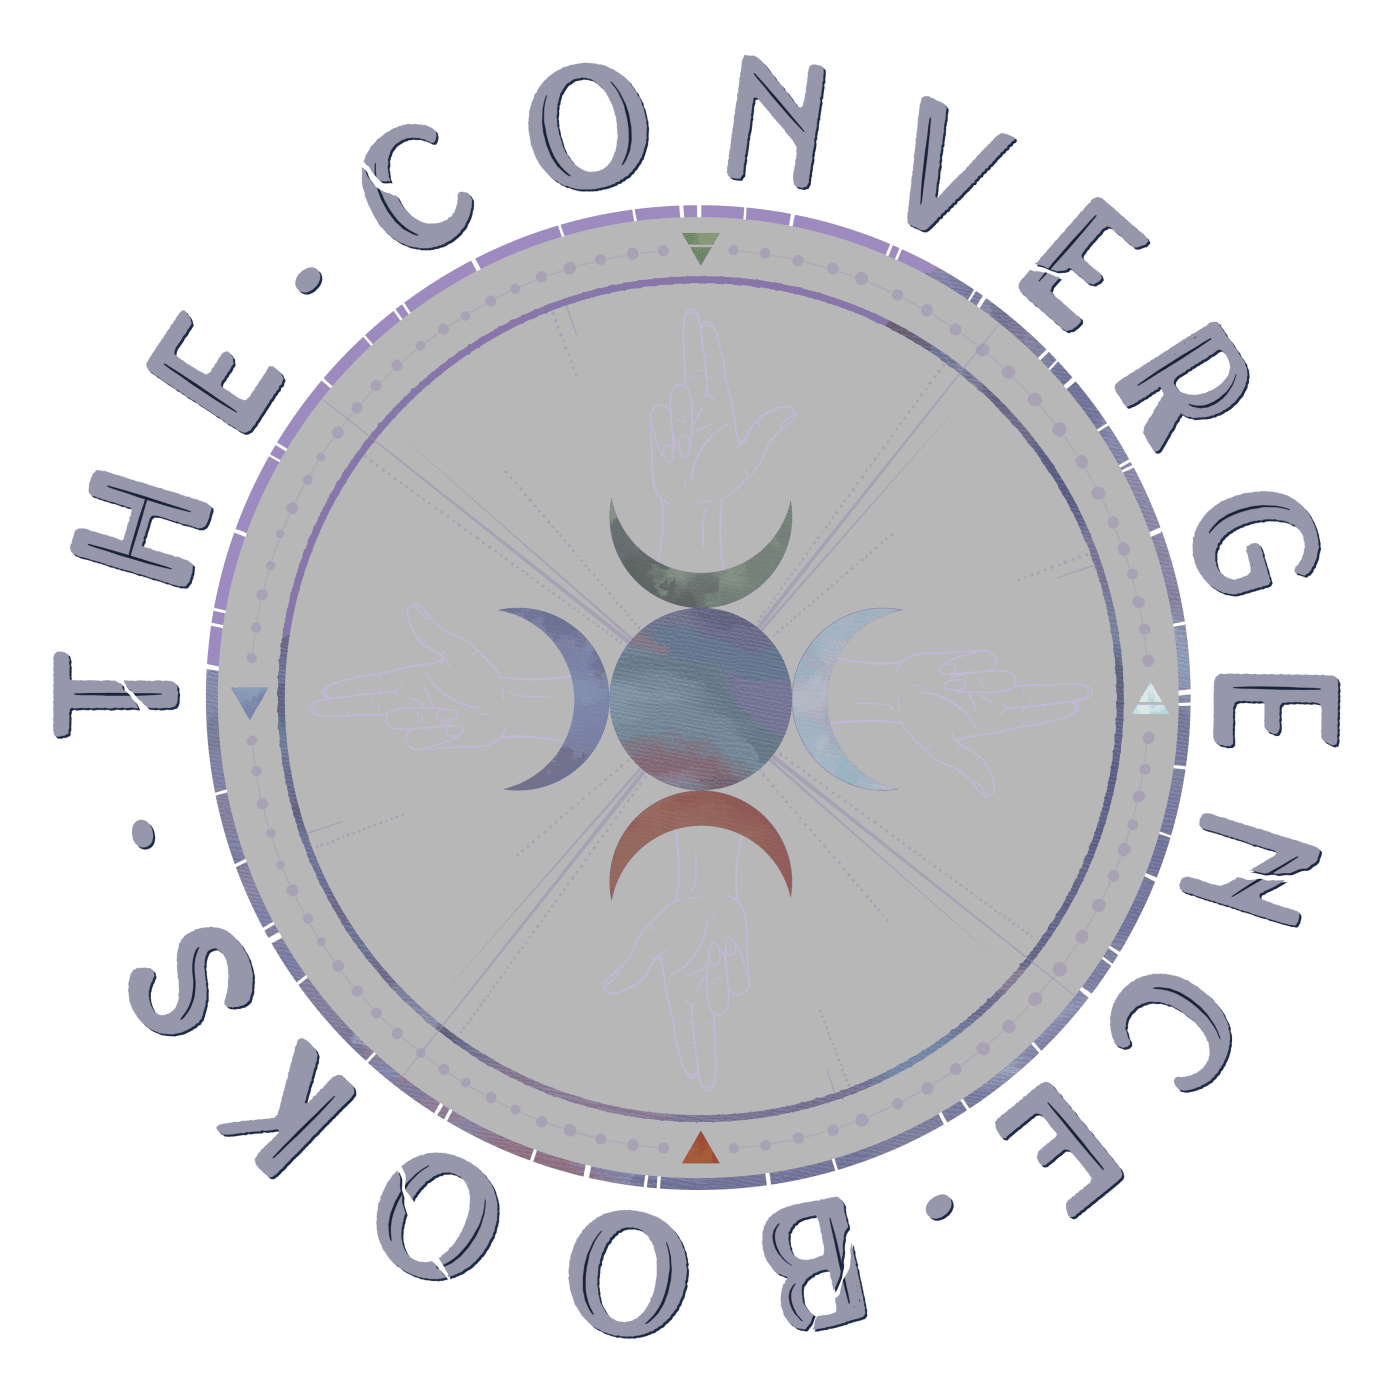 Convergence books logo